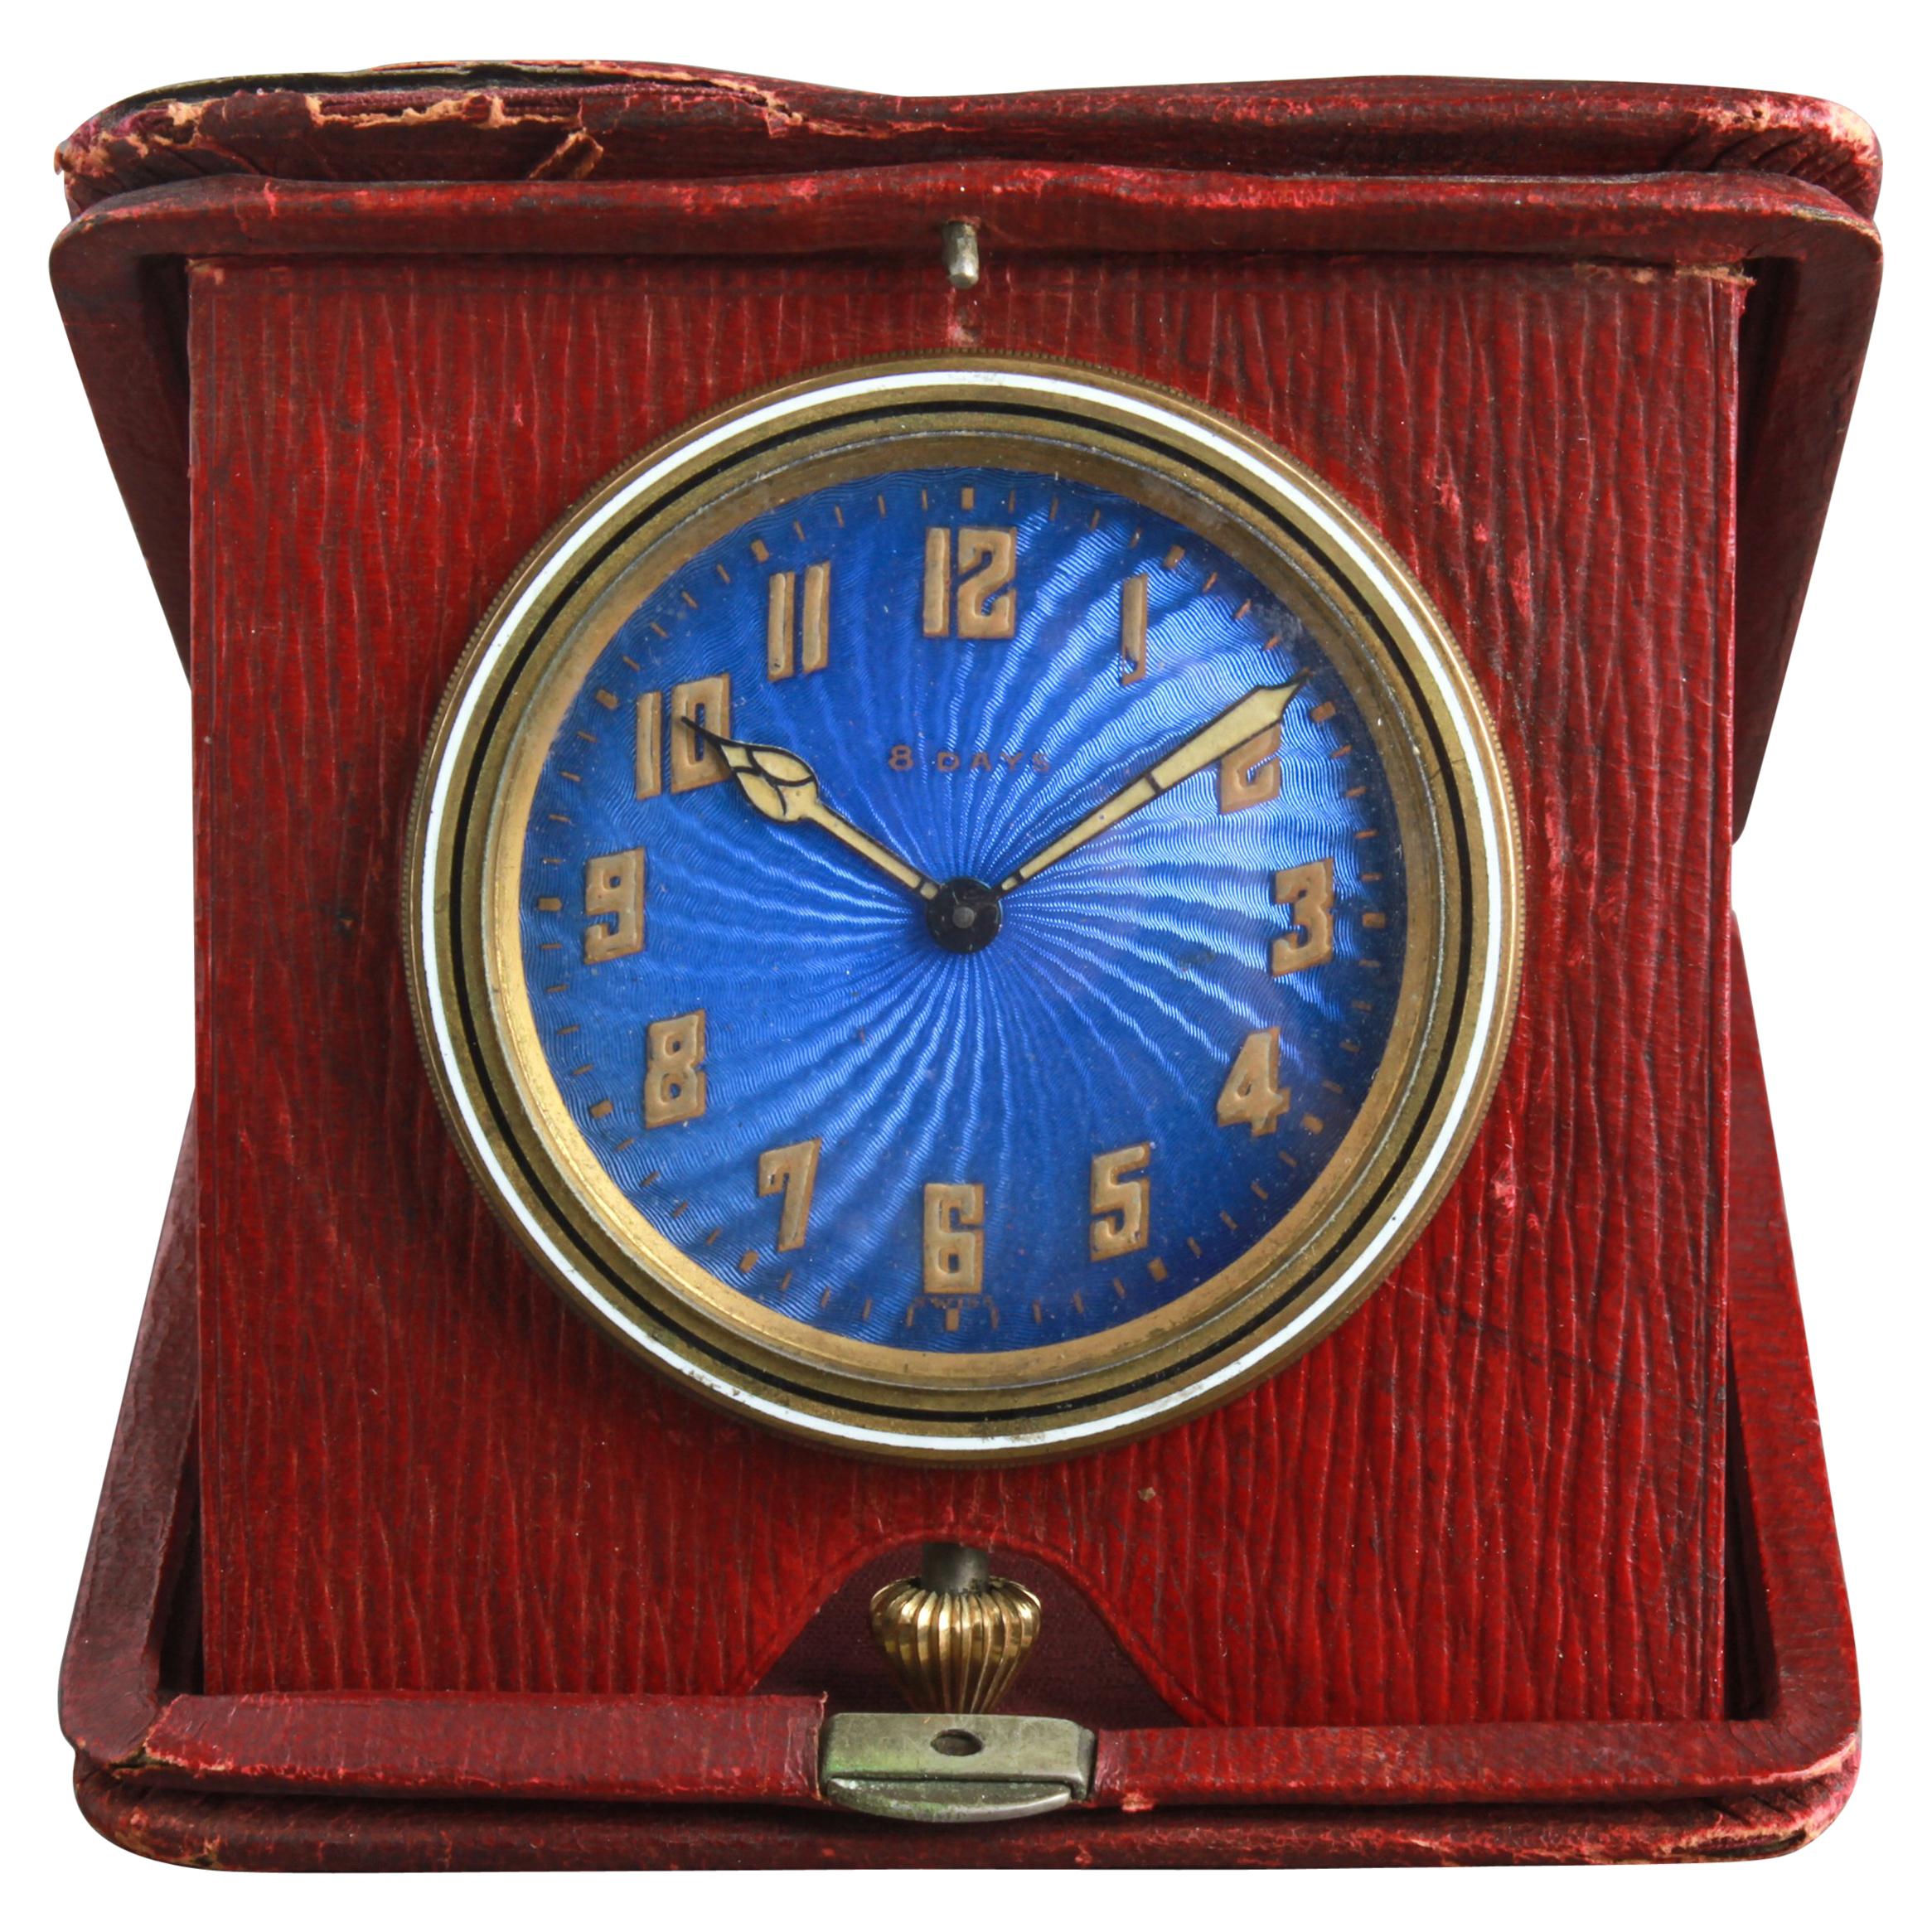 Sprague & Co. Swiss Guilloche Enamel Travel Clock